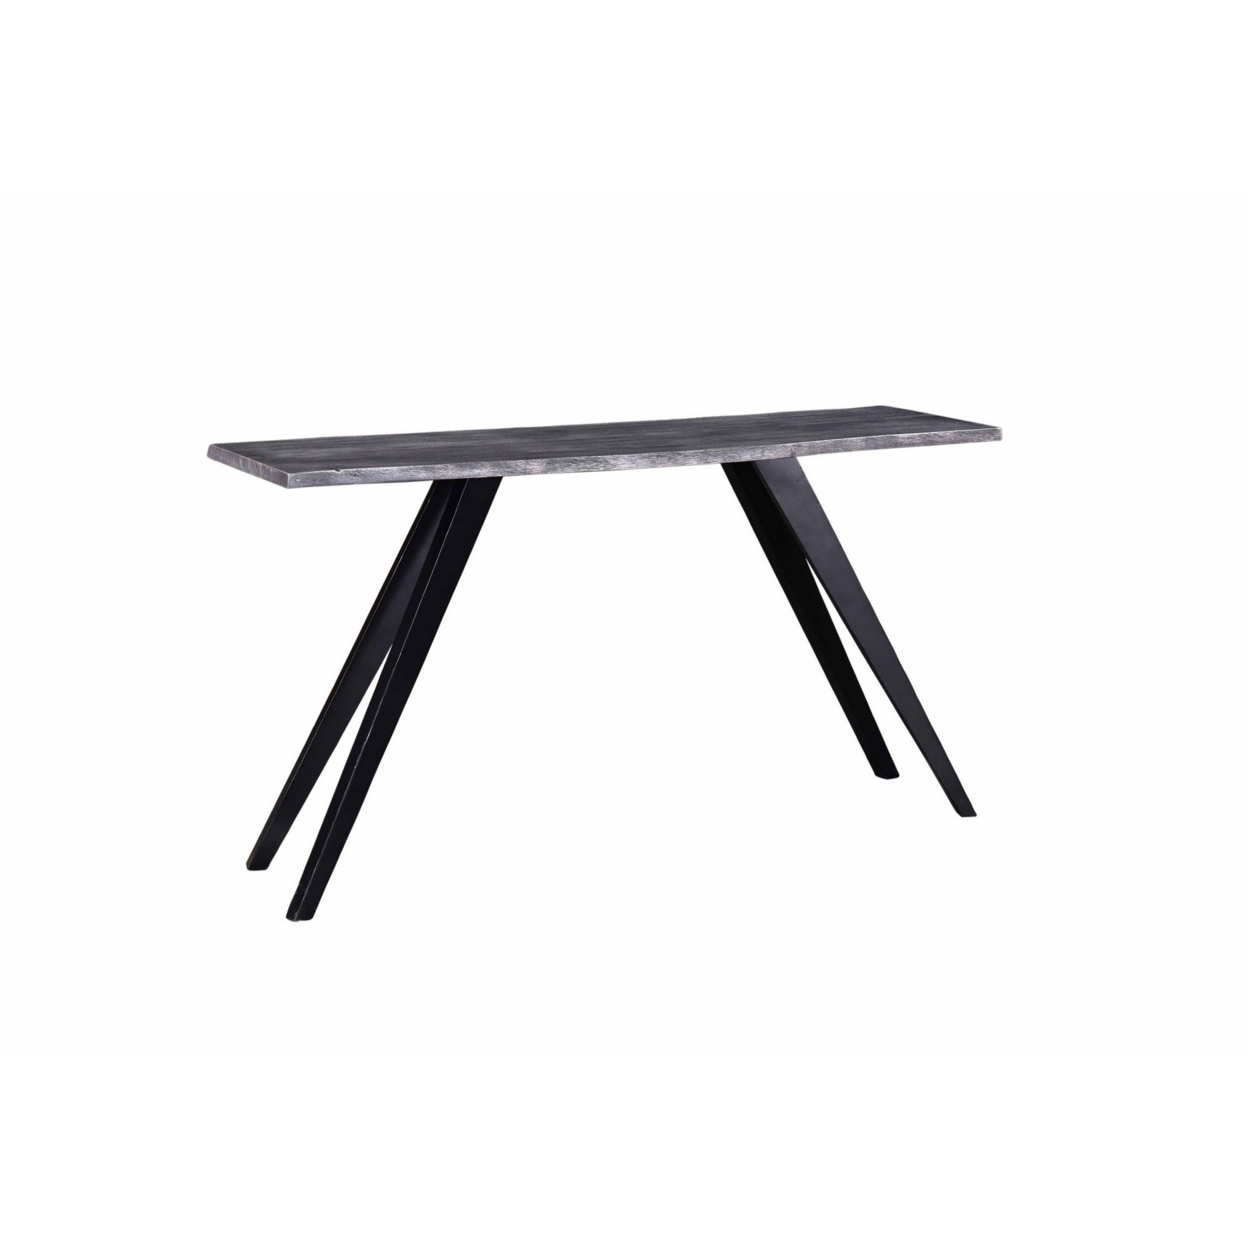 Chad 60 Inch Console Side Table, Dark Gray Acacia Wood, Black Angled Legs- Saltoro Sherpi